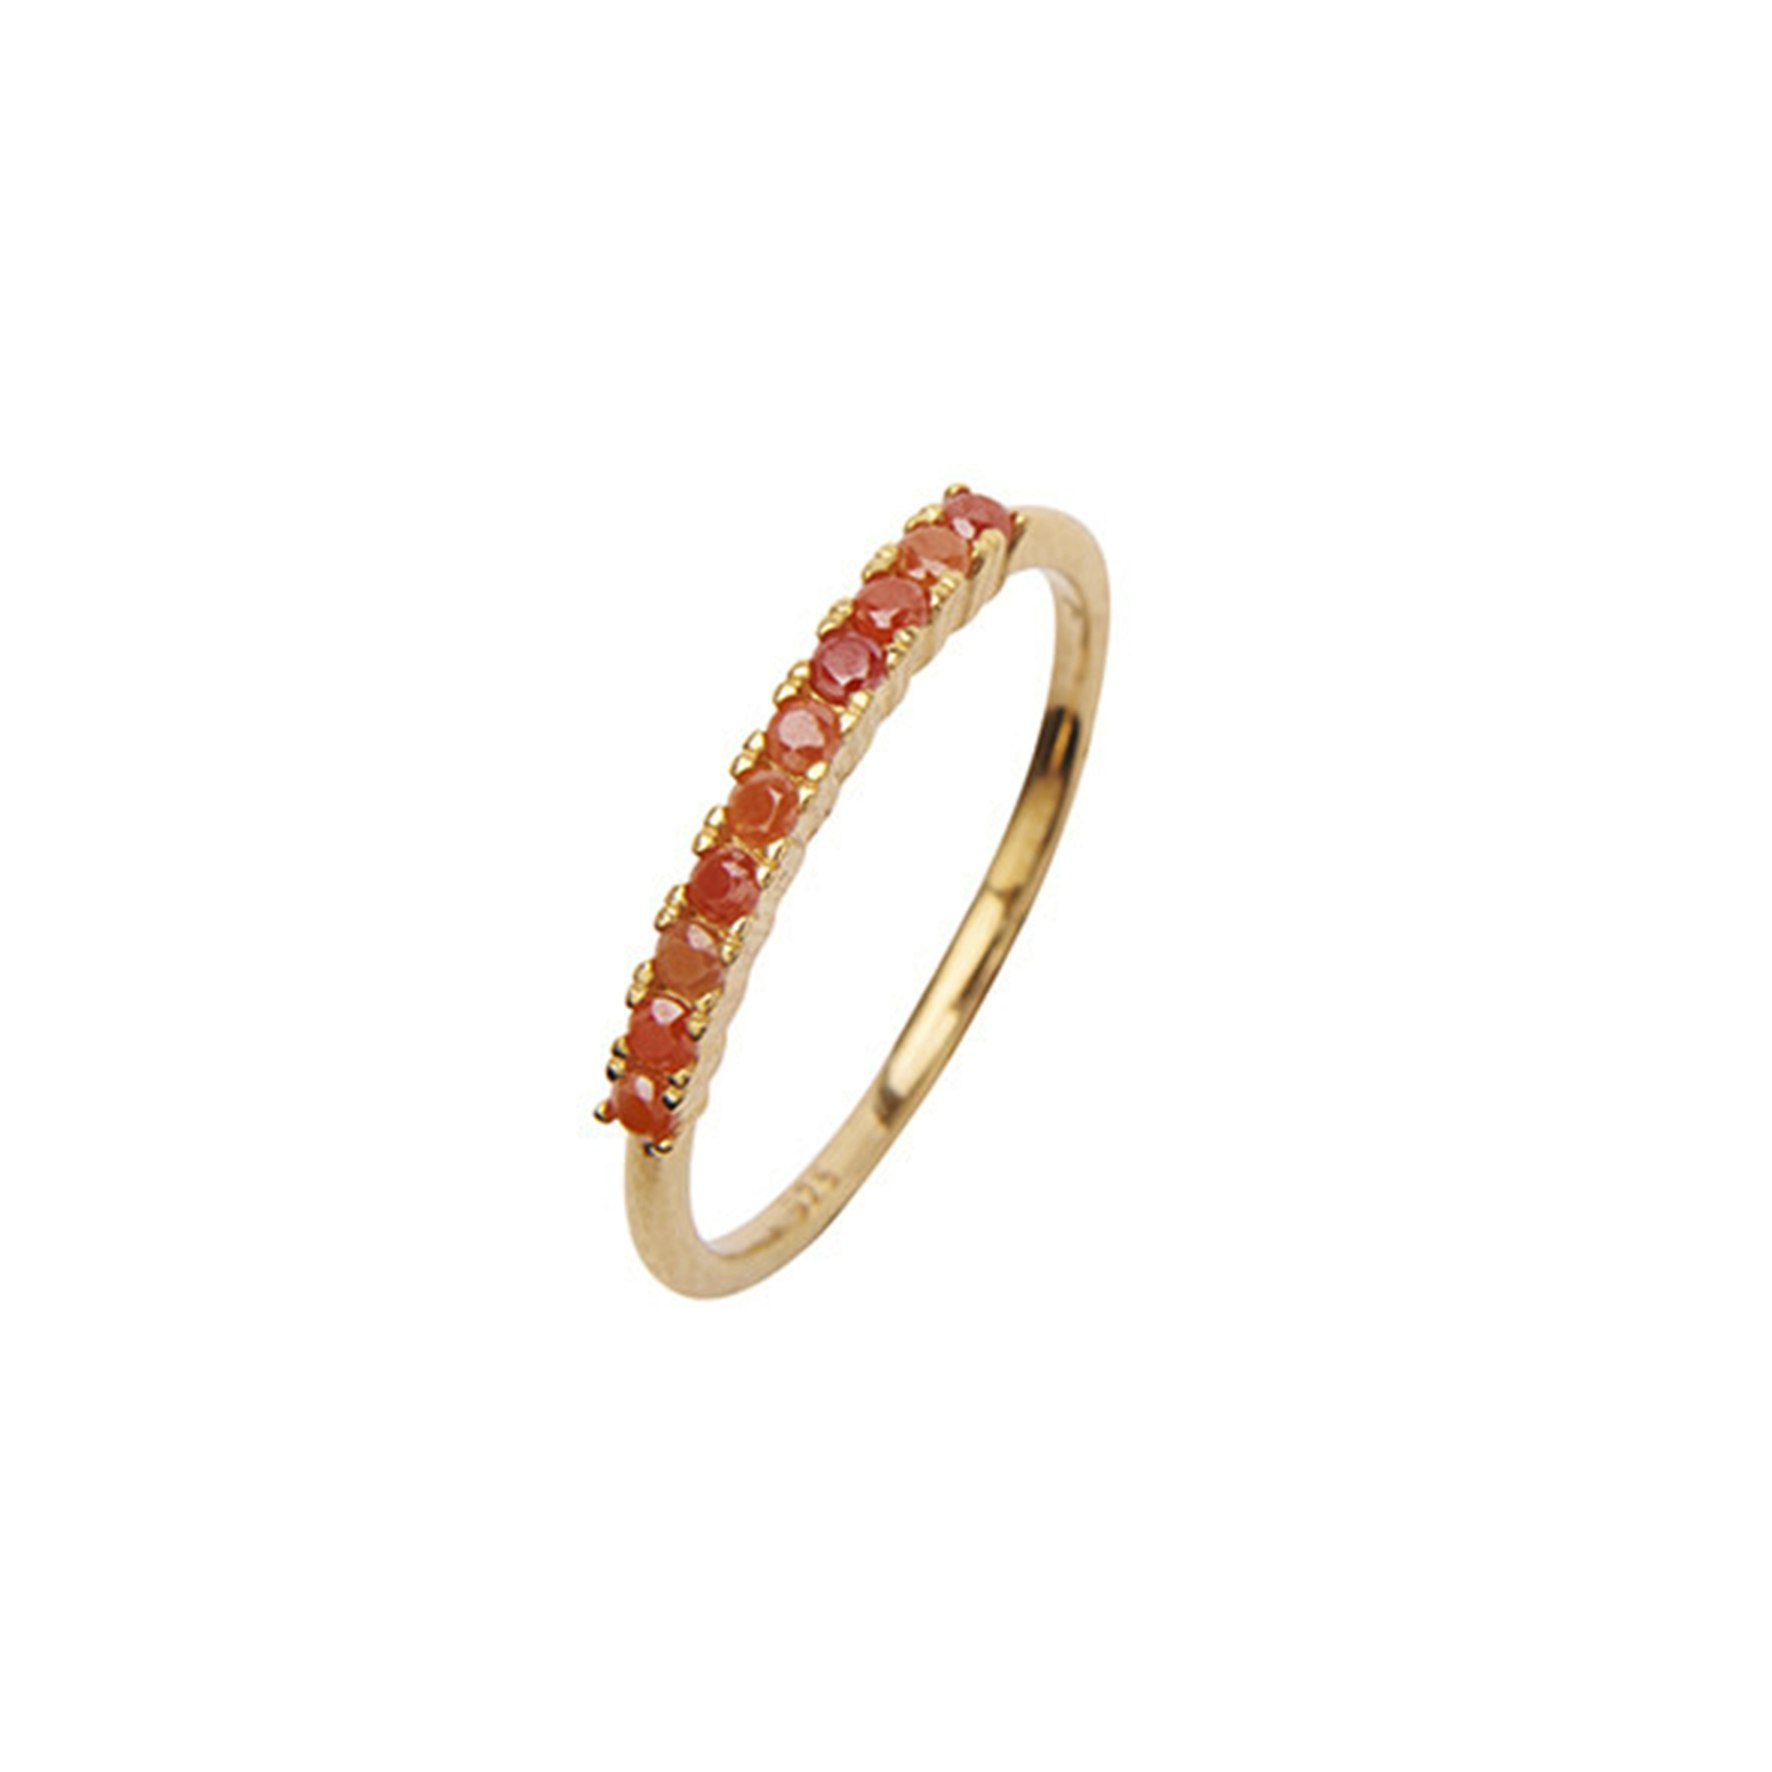 Fineley Crystal Ring Coral von Pico in Vergoldet-Silber Sterling 925